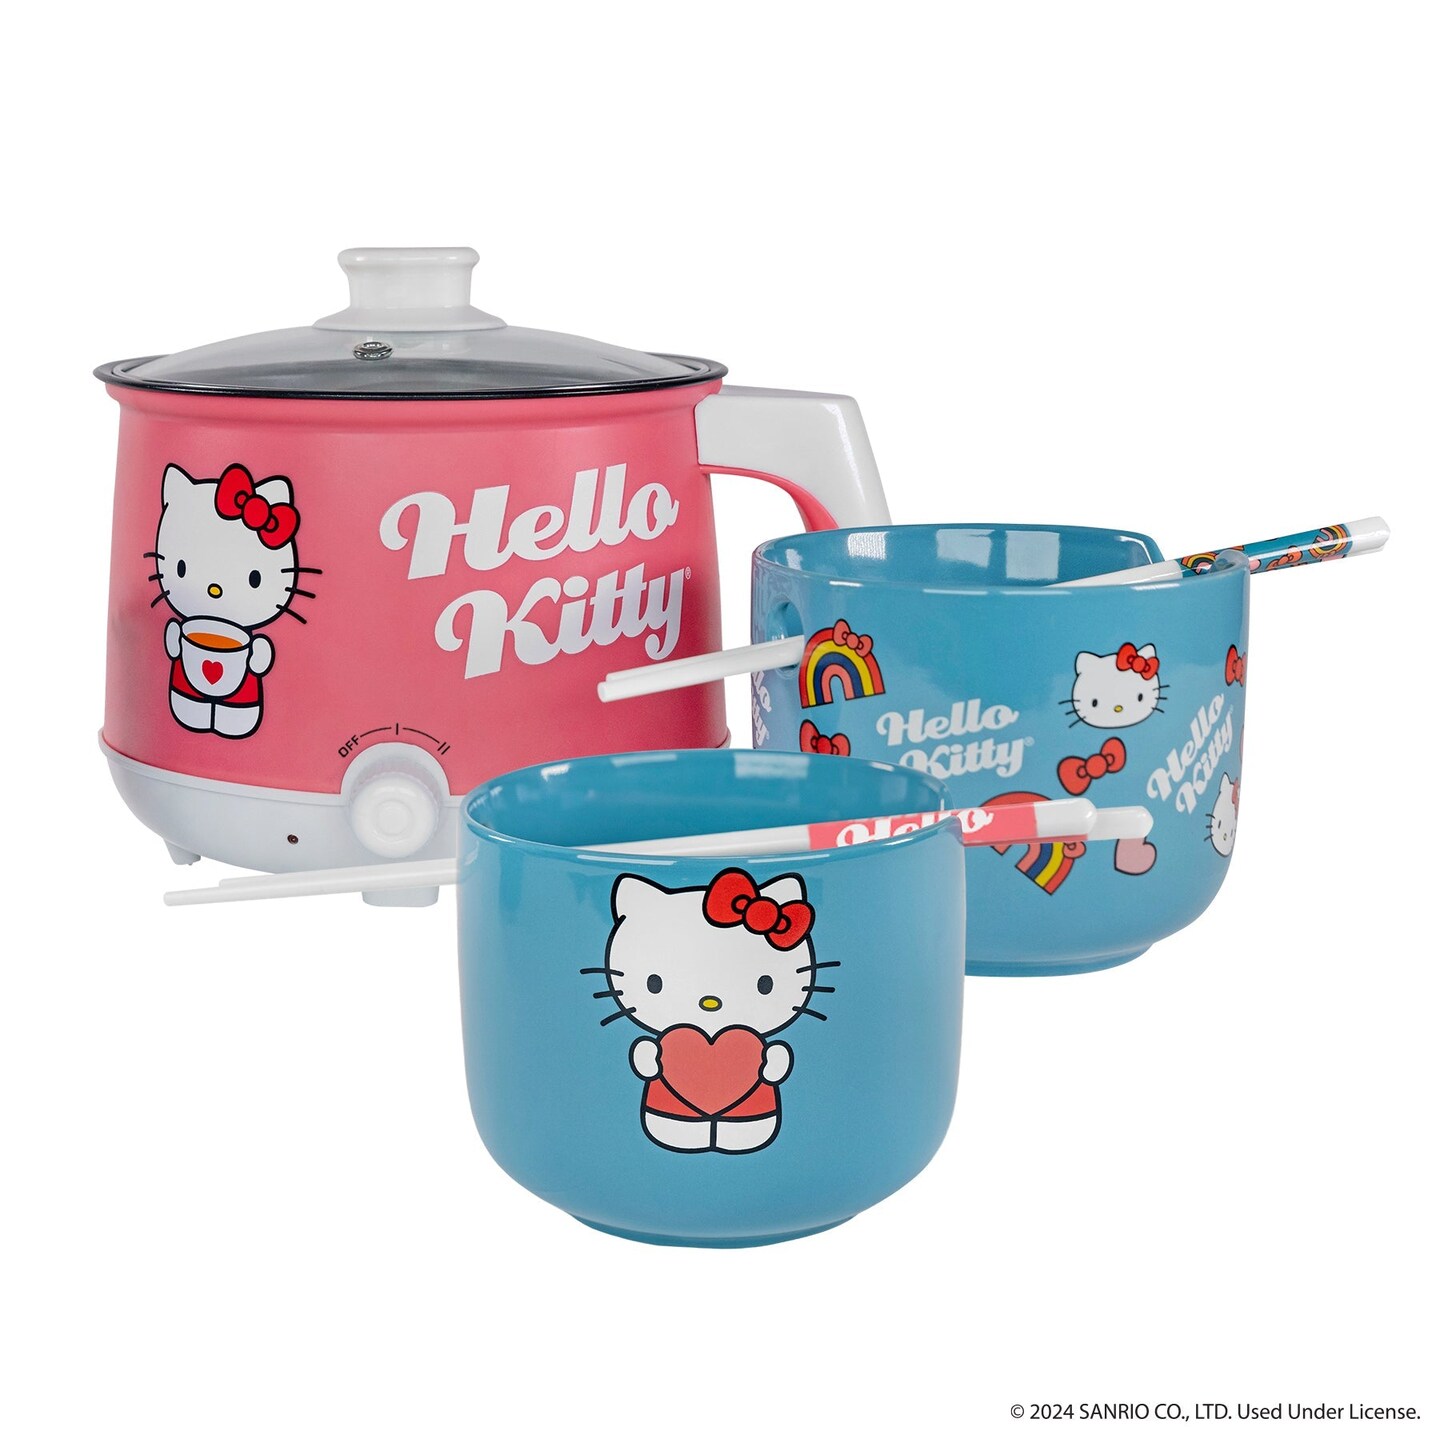 Uncanny Brands Hello Kitty Hot Pot with Ramen Bowls